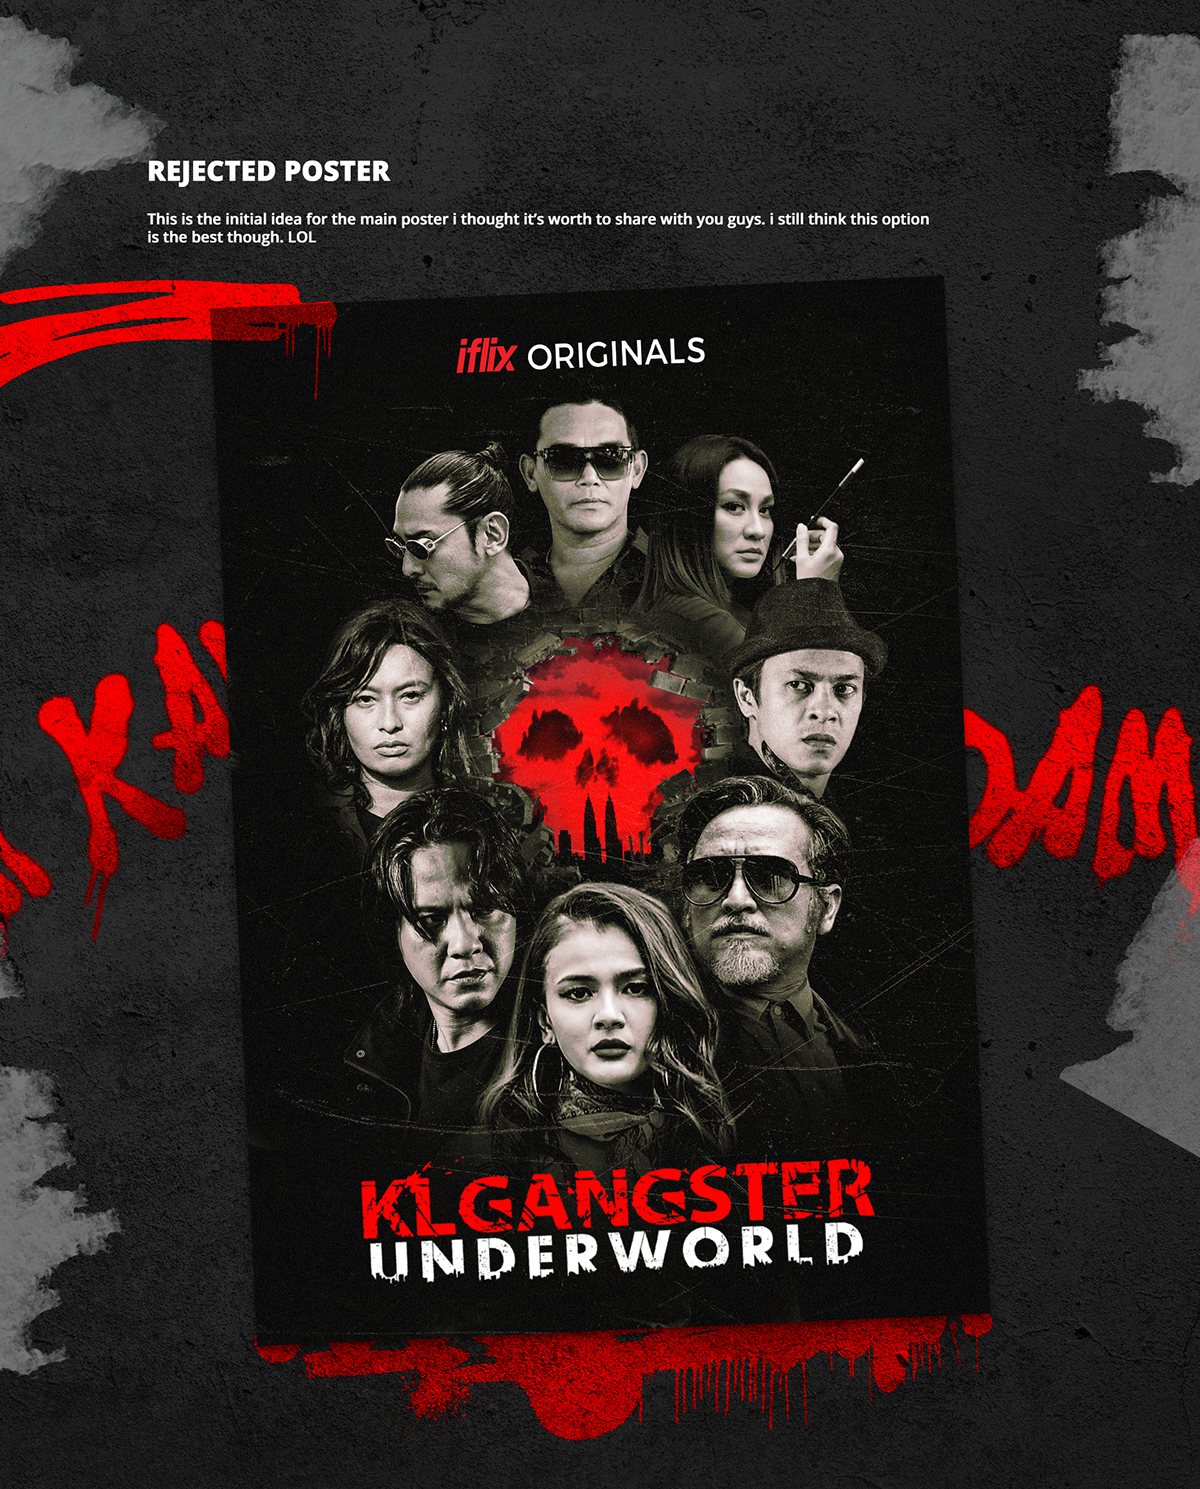 Kl gangster underworld 2 full movie